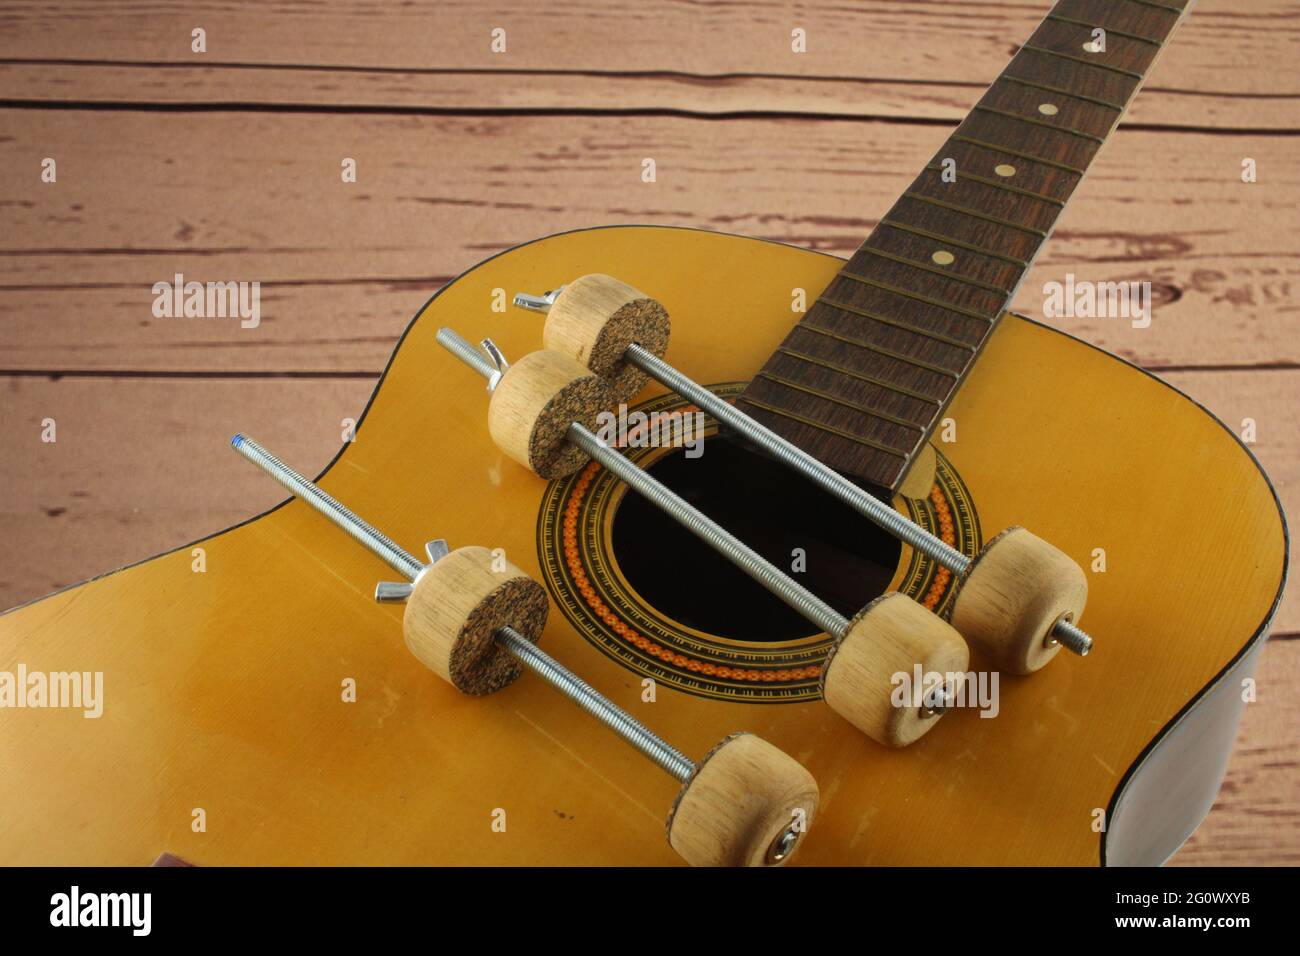 Guitar repairs hi-res stock photography and images - Alamy